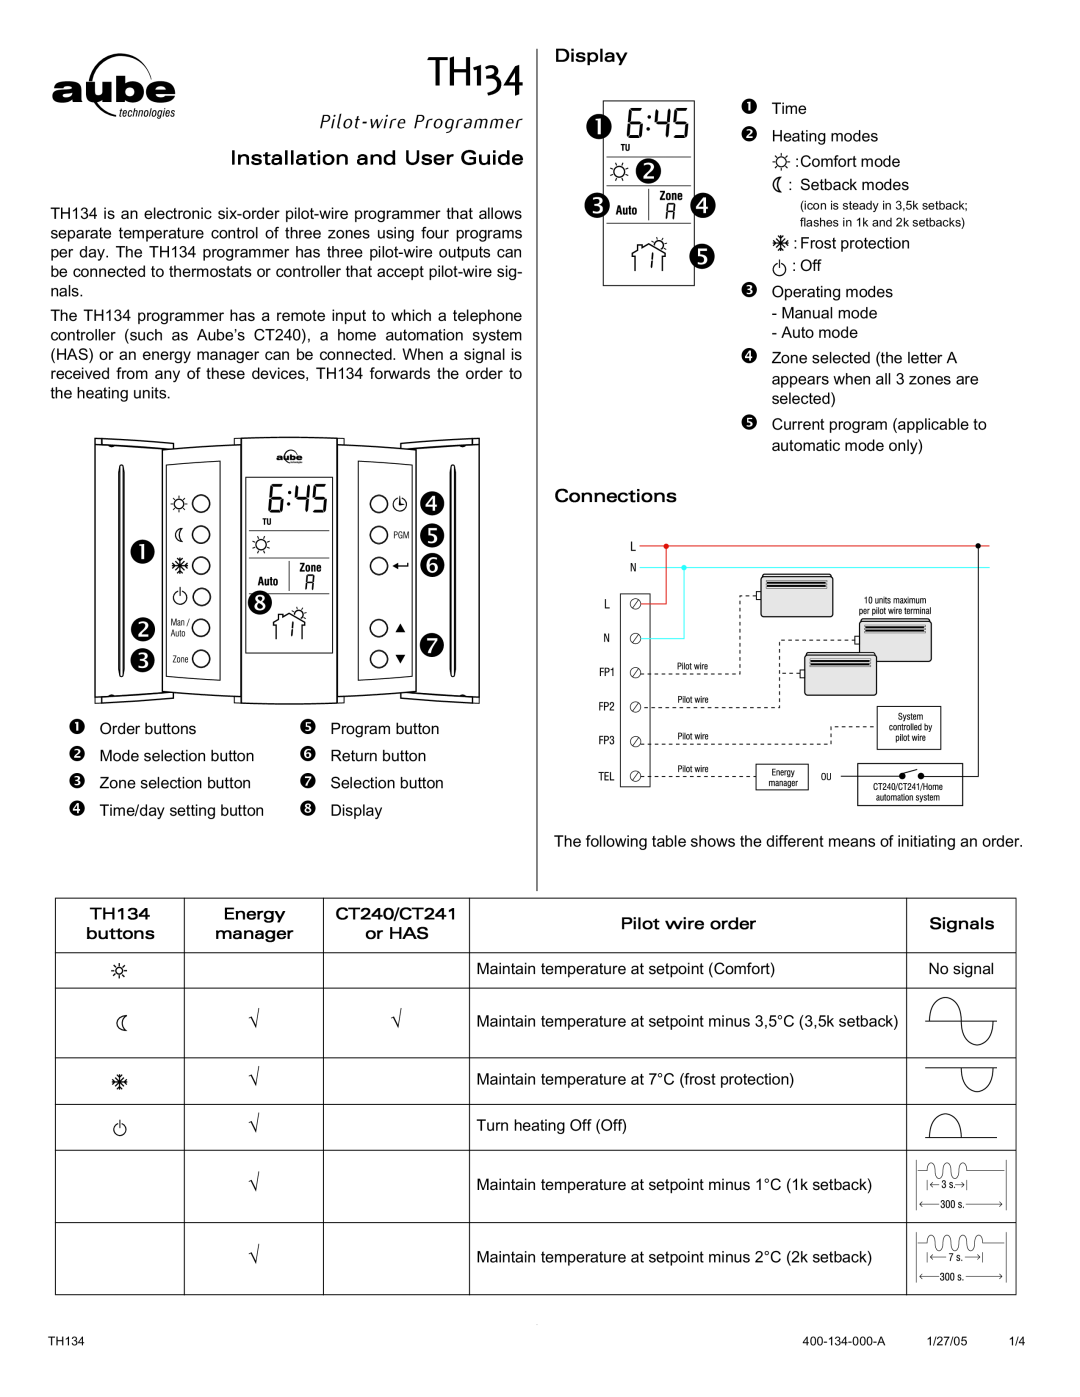 Aube Technologies TH134 manual n Time 